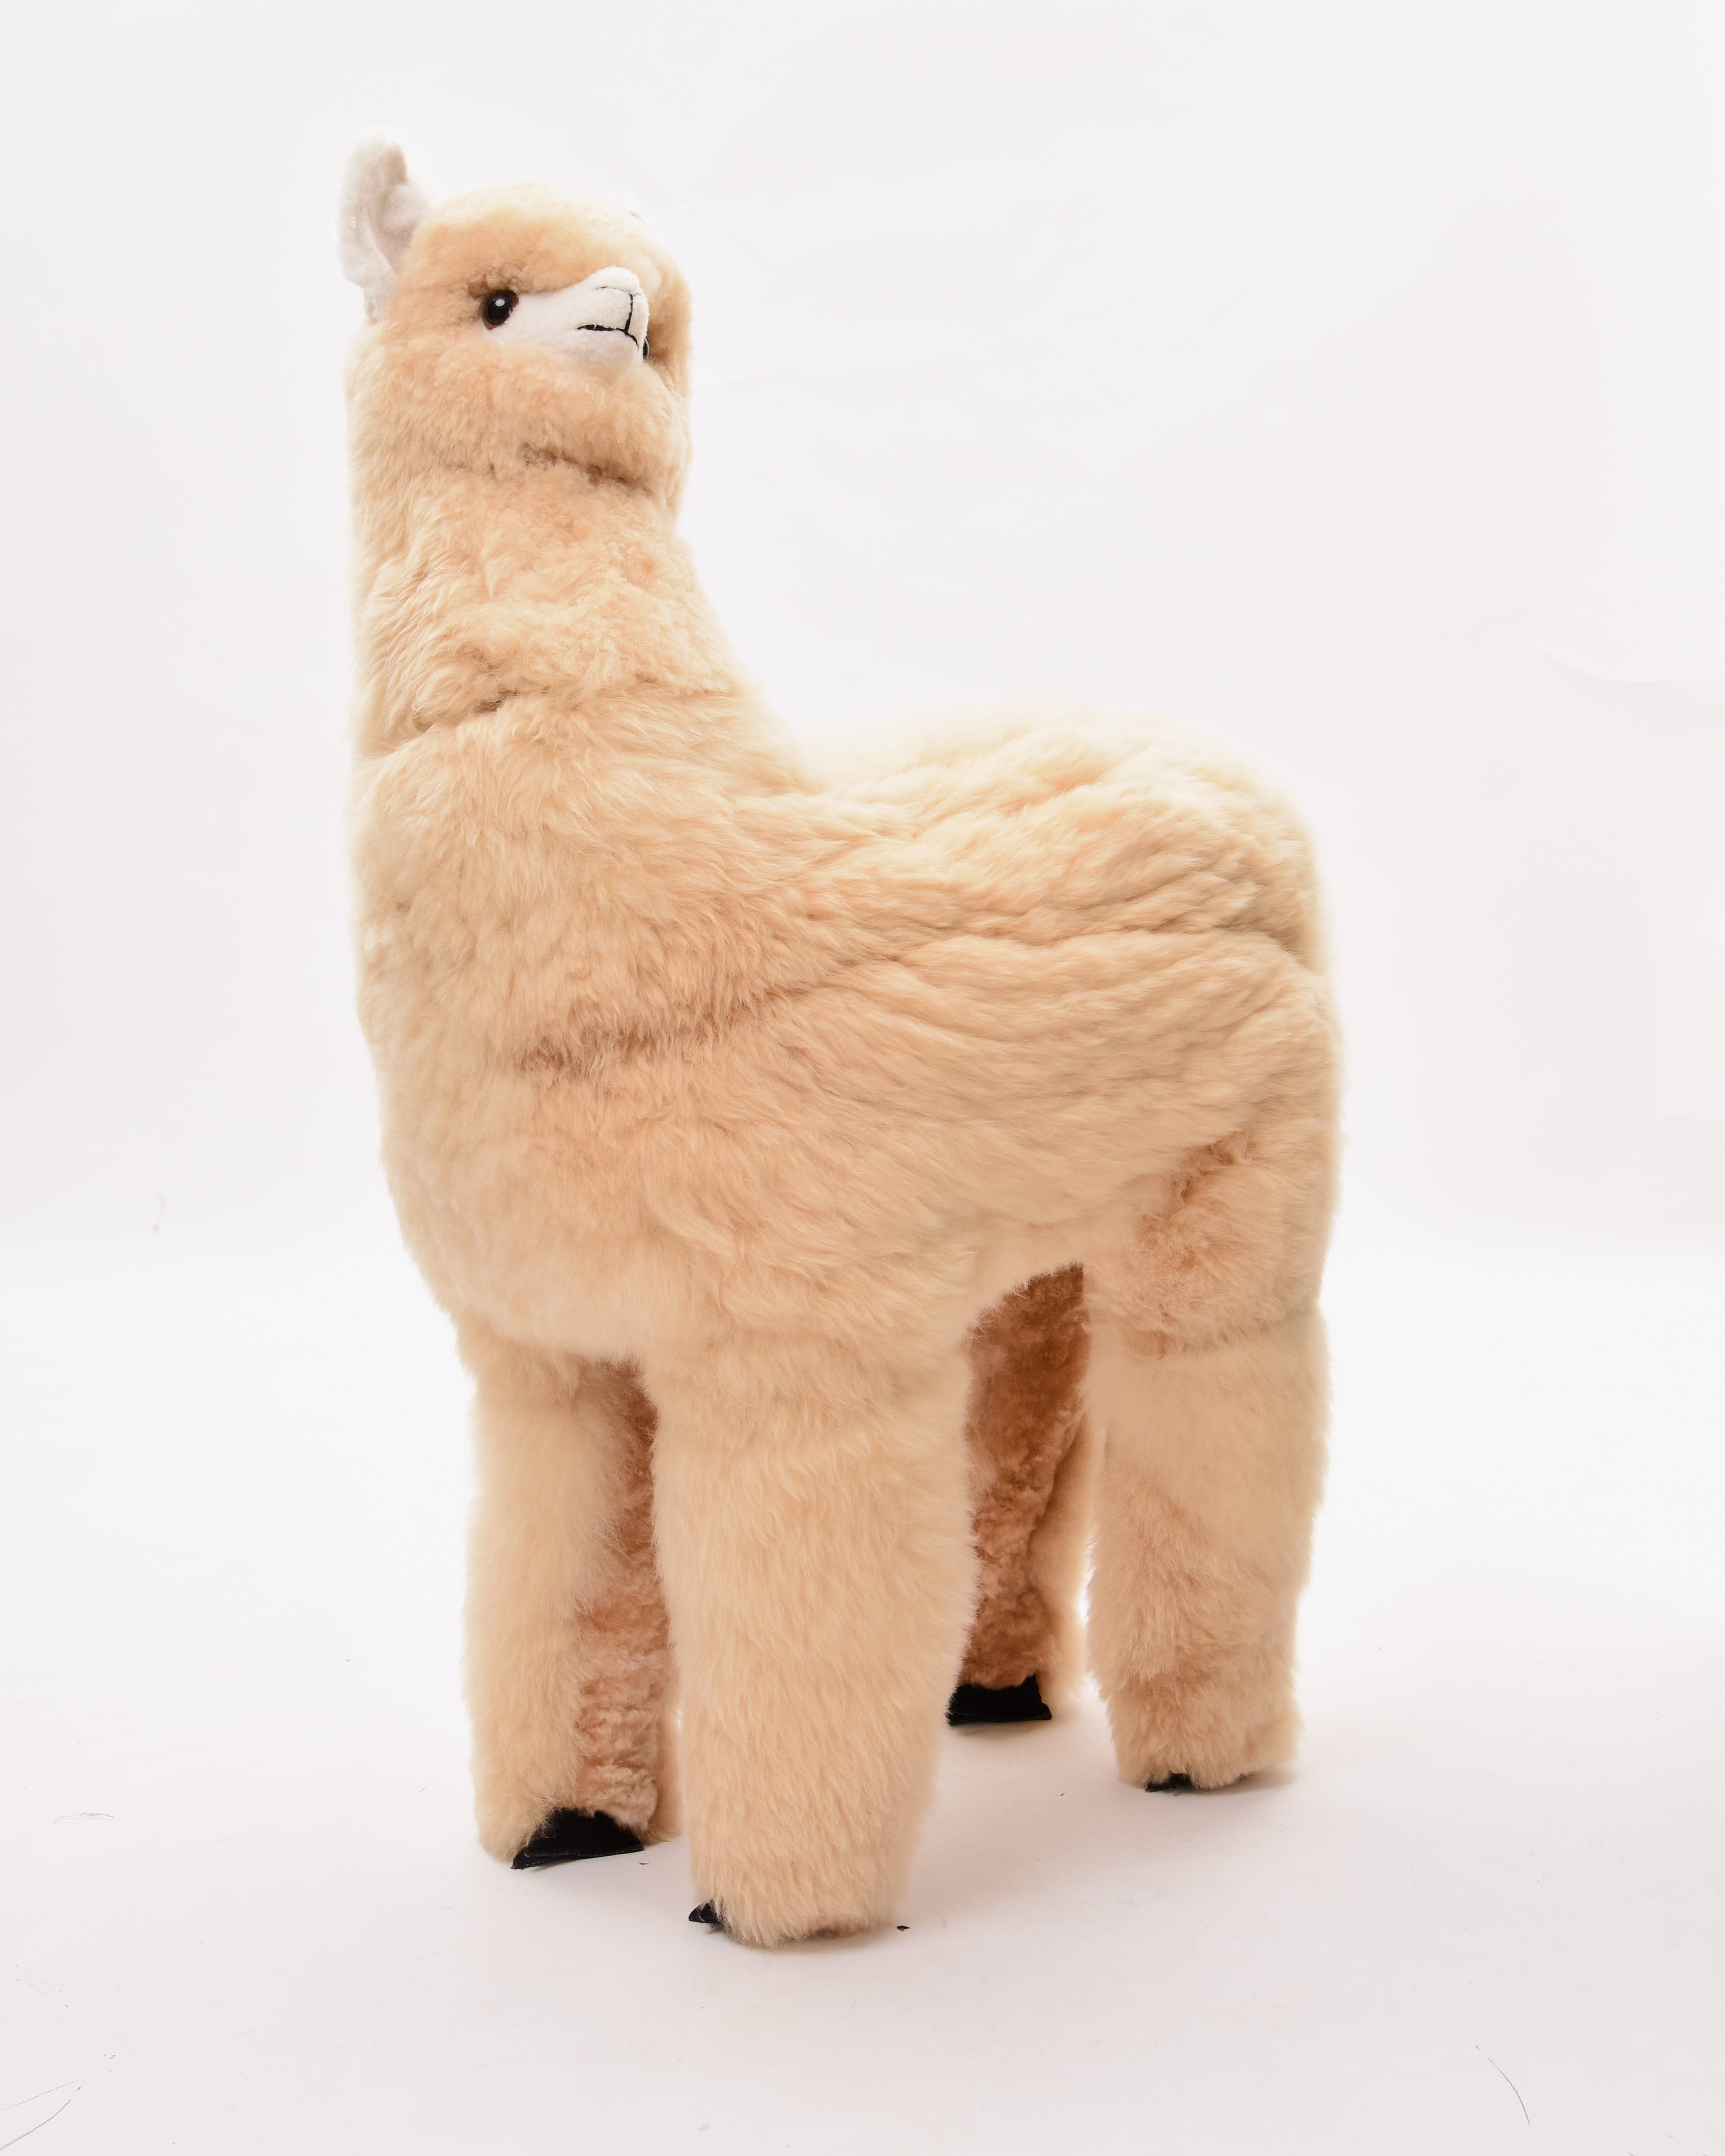 The 1.2 Metre Baby Alpaca